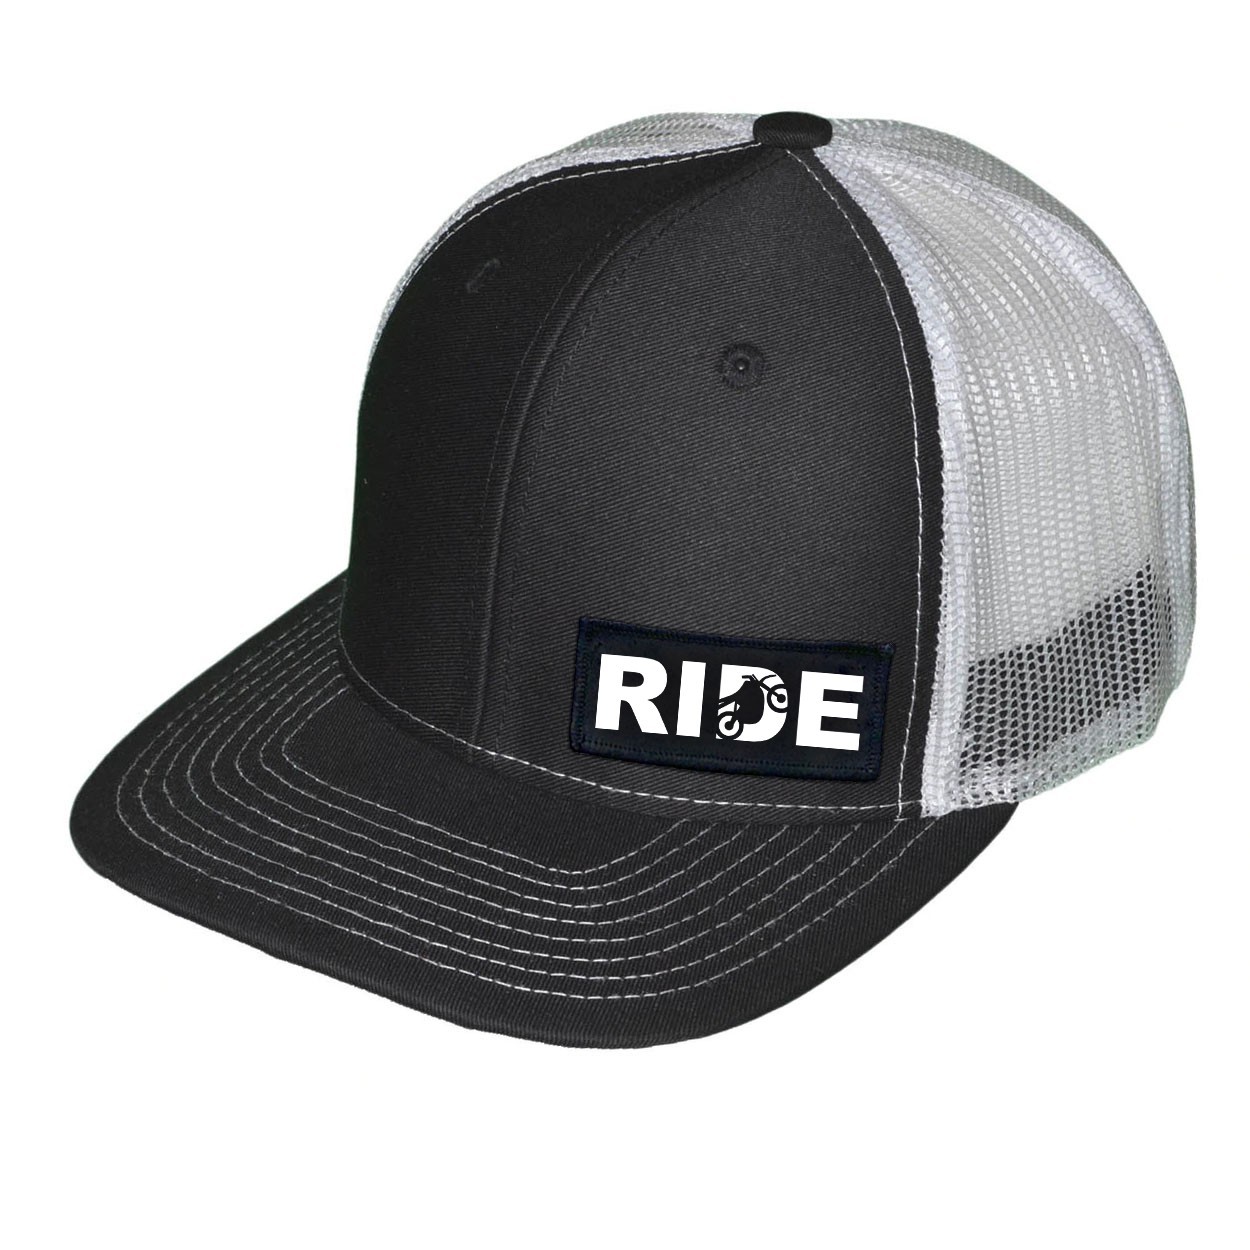 Ride Moto Logo Night Out Woven Patch Snapback Trucker Hat Black/White (White Logo)